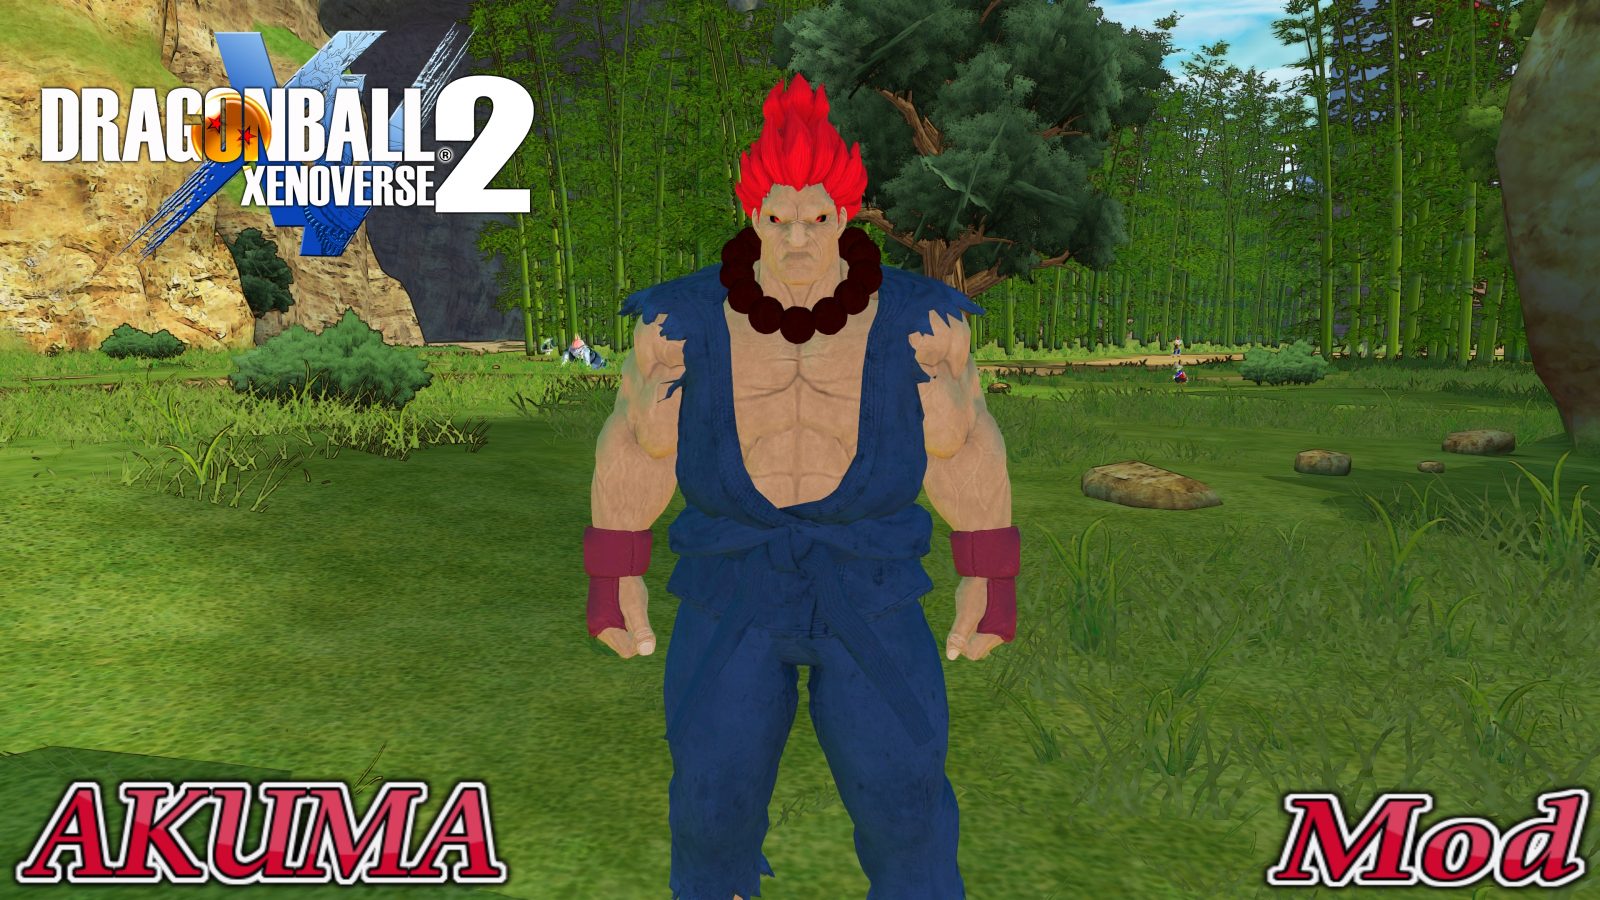 Akuma as Oni More - Street Fighter V PC Mods